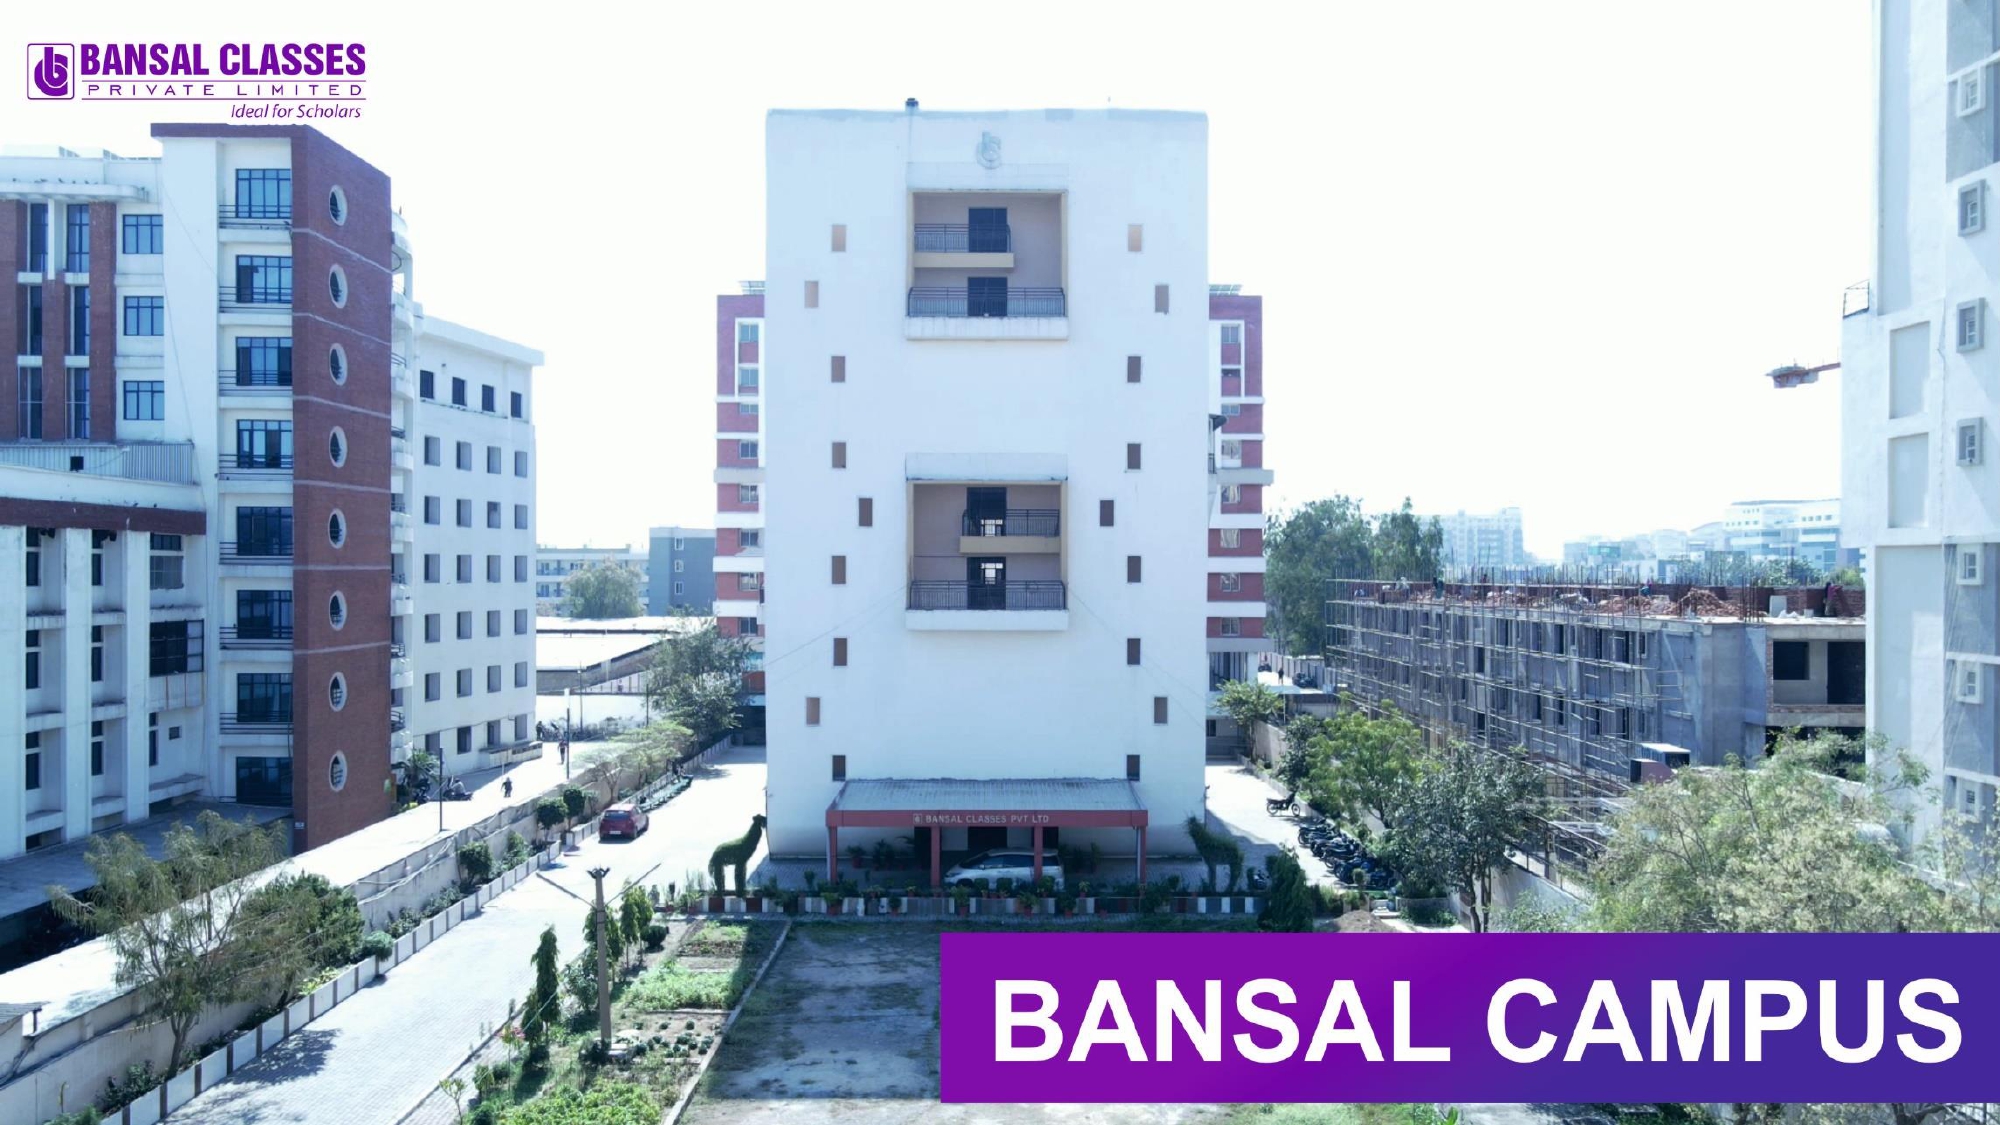 Bansal Campus